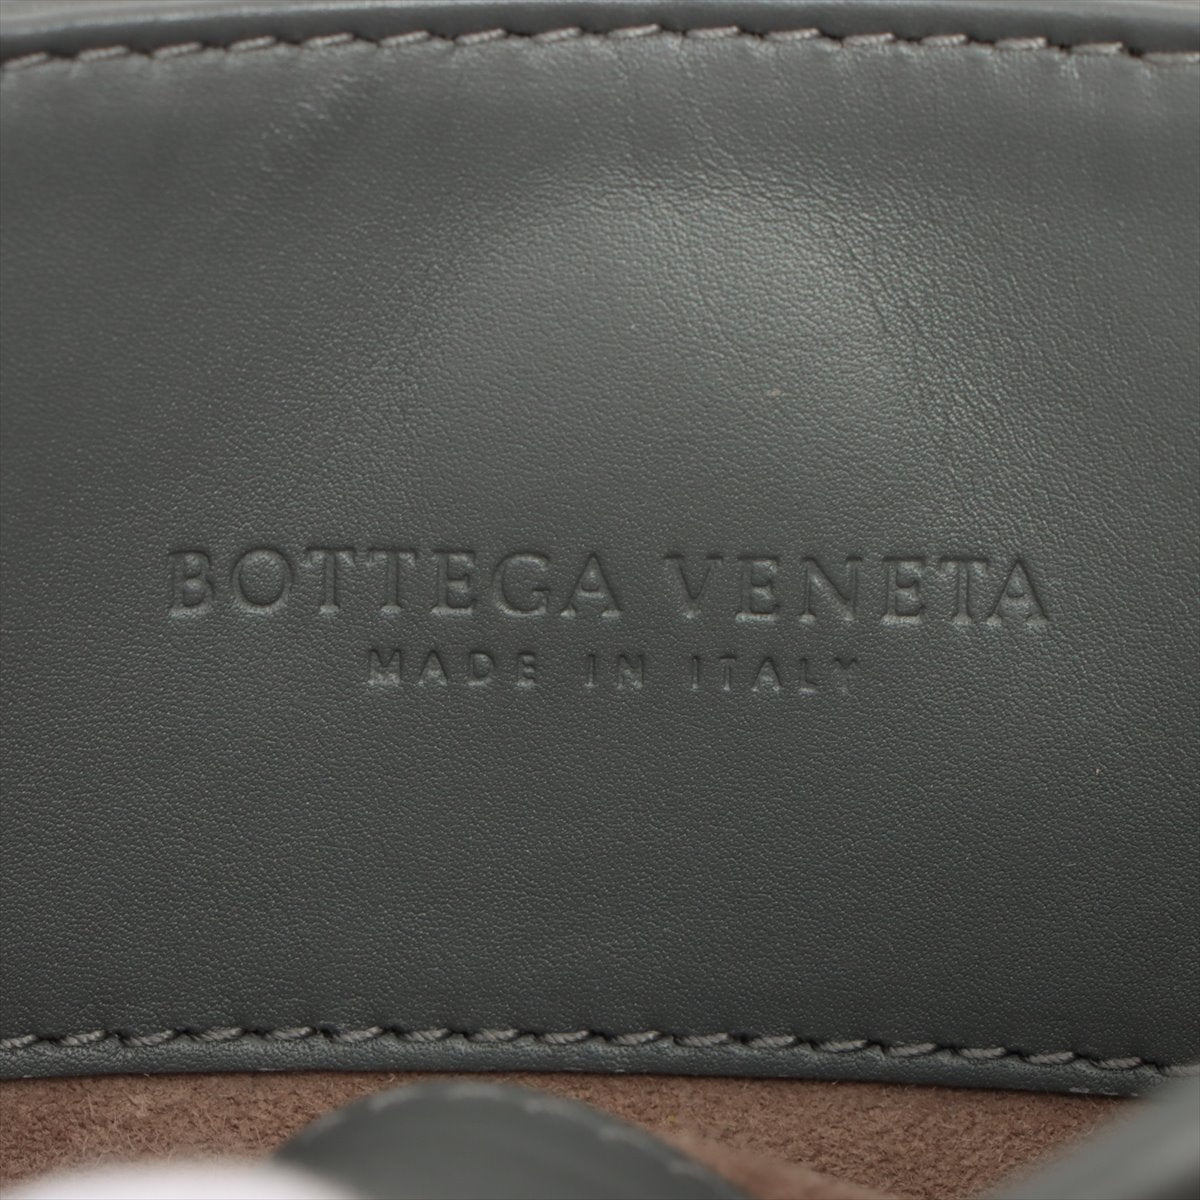 Bottega Veneta Intercept Rome Leather 2WAY Shoulder Bag Gr